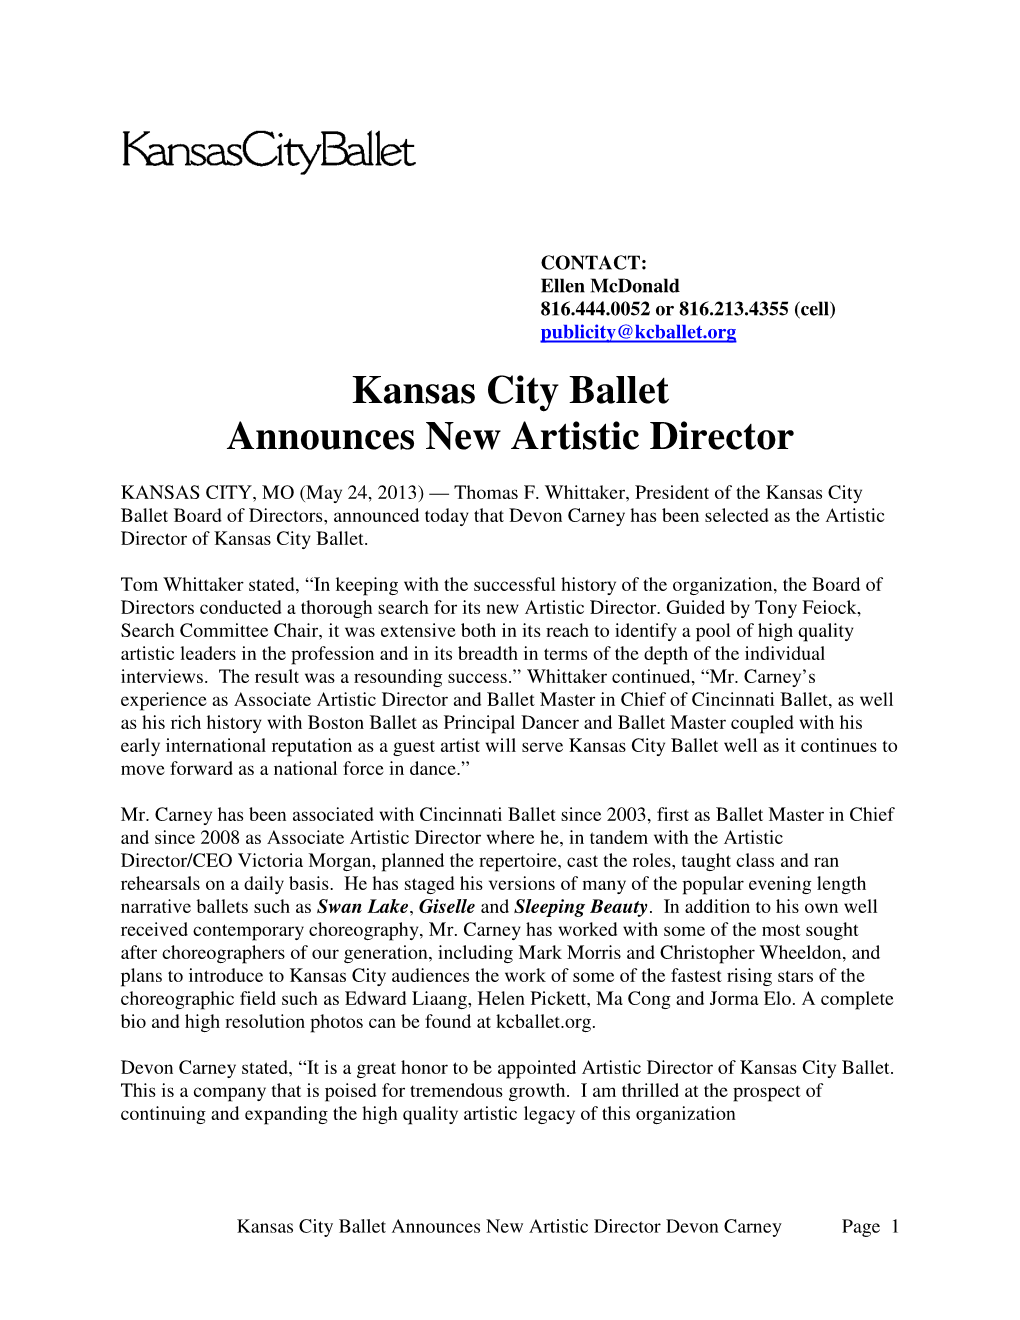 May 24, 2013 Kansas City Ballet Announces New Artistic Director